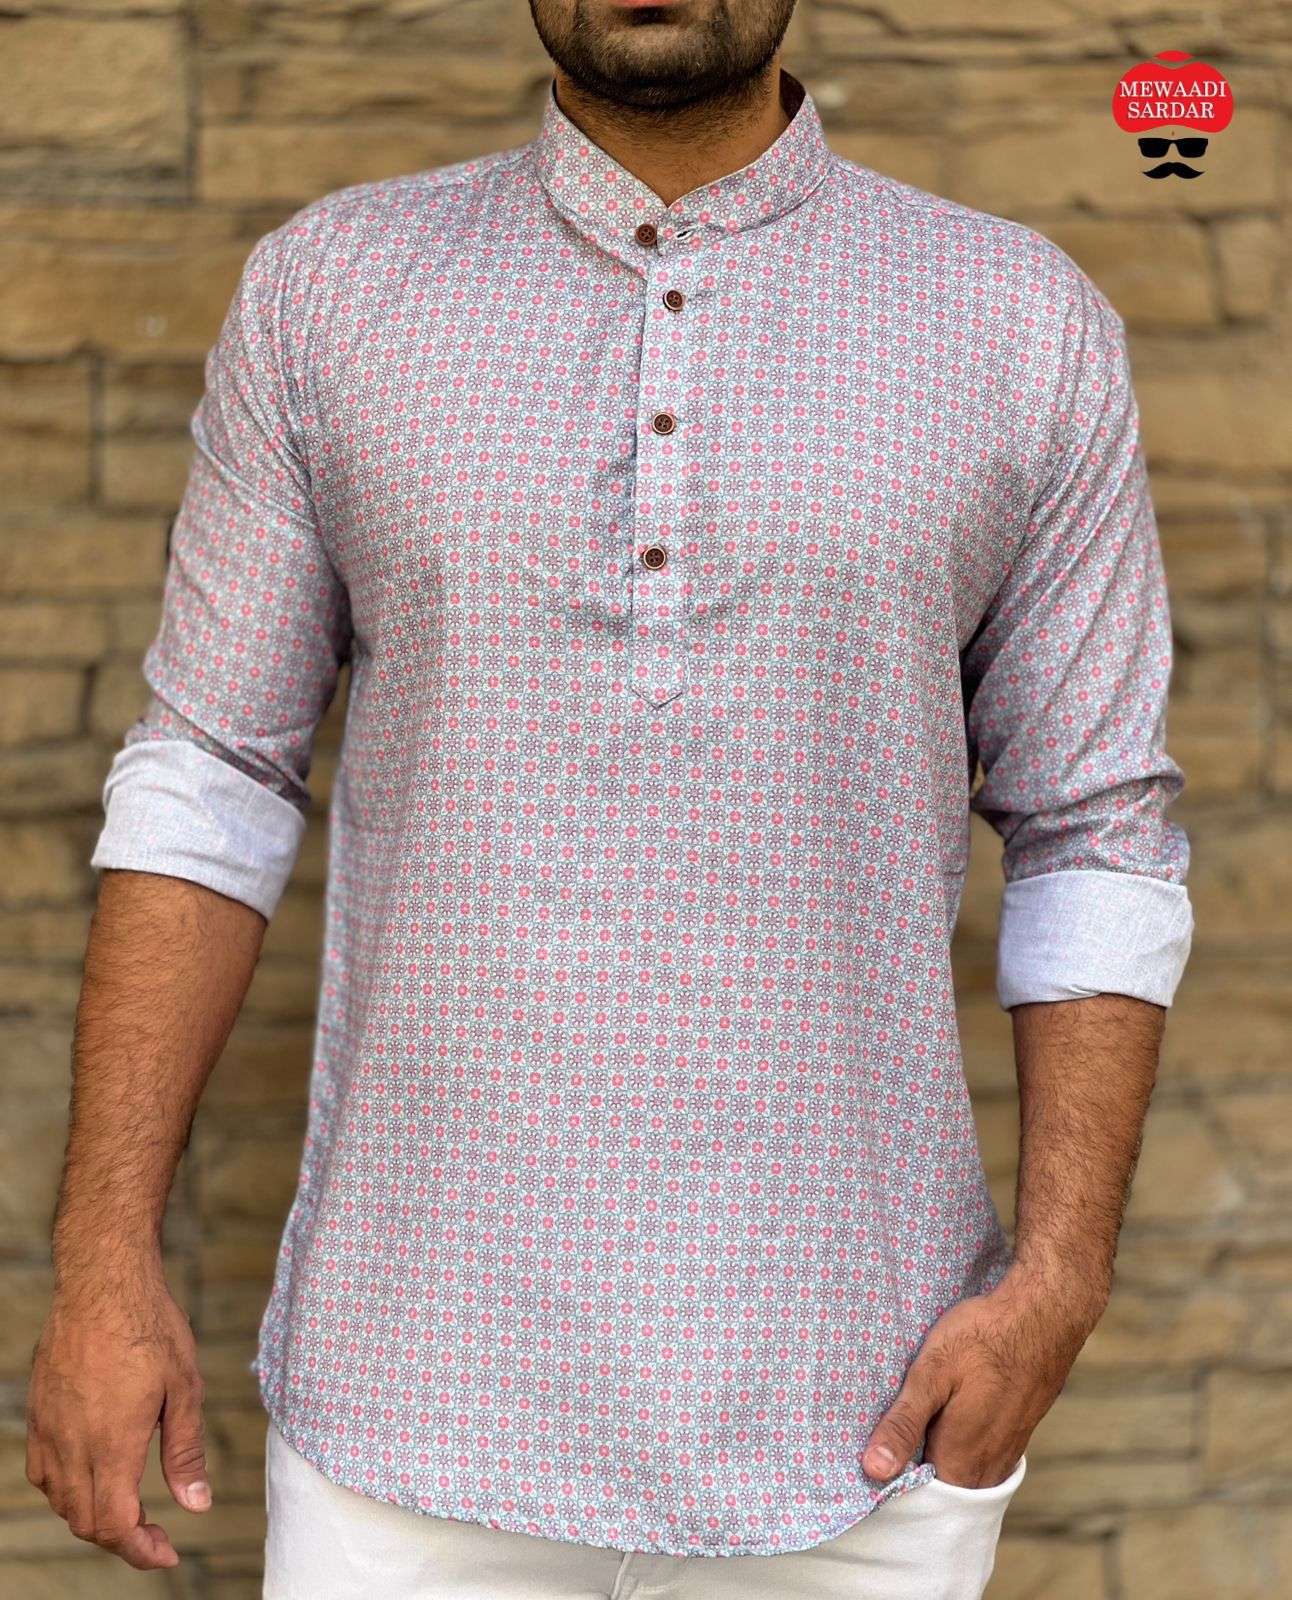 Mewaadi Sardar leo designer Cotton Short length Kurta